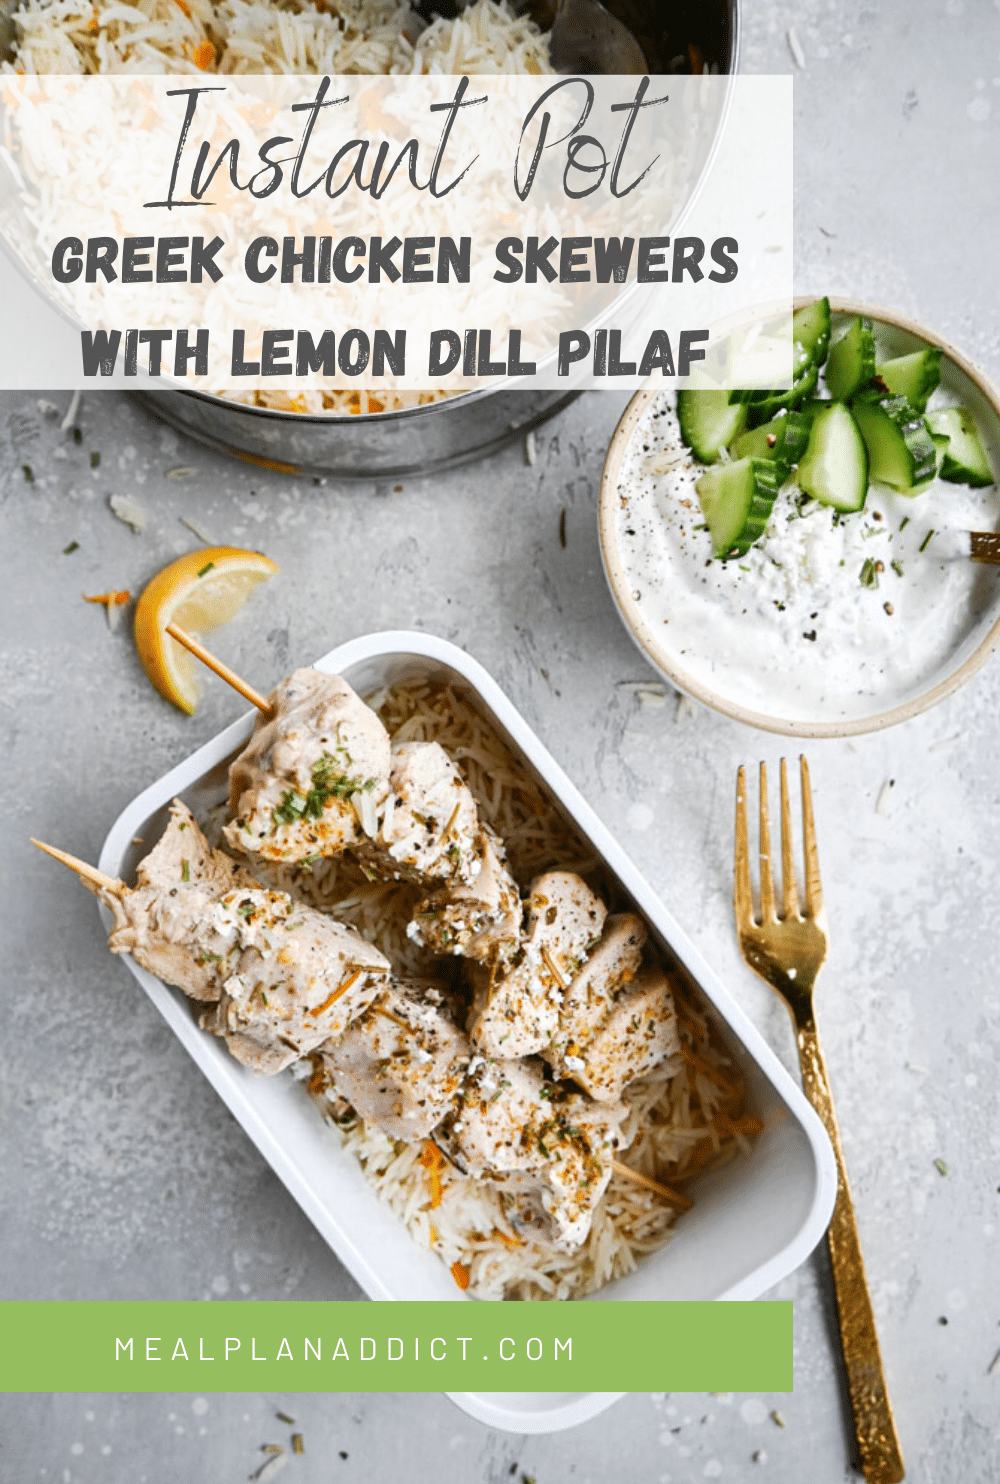 Instant pot greek chicken skewers with lemon dill pilaf